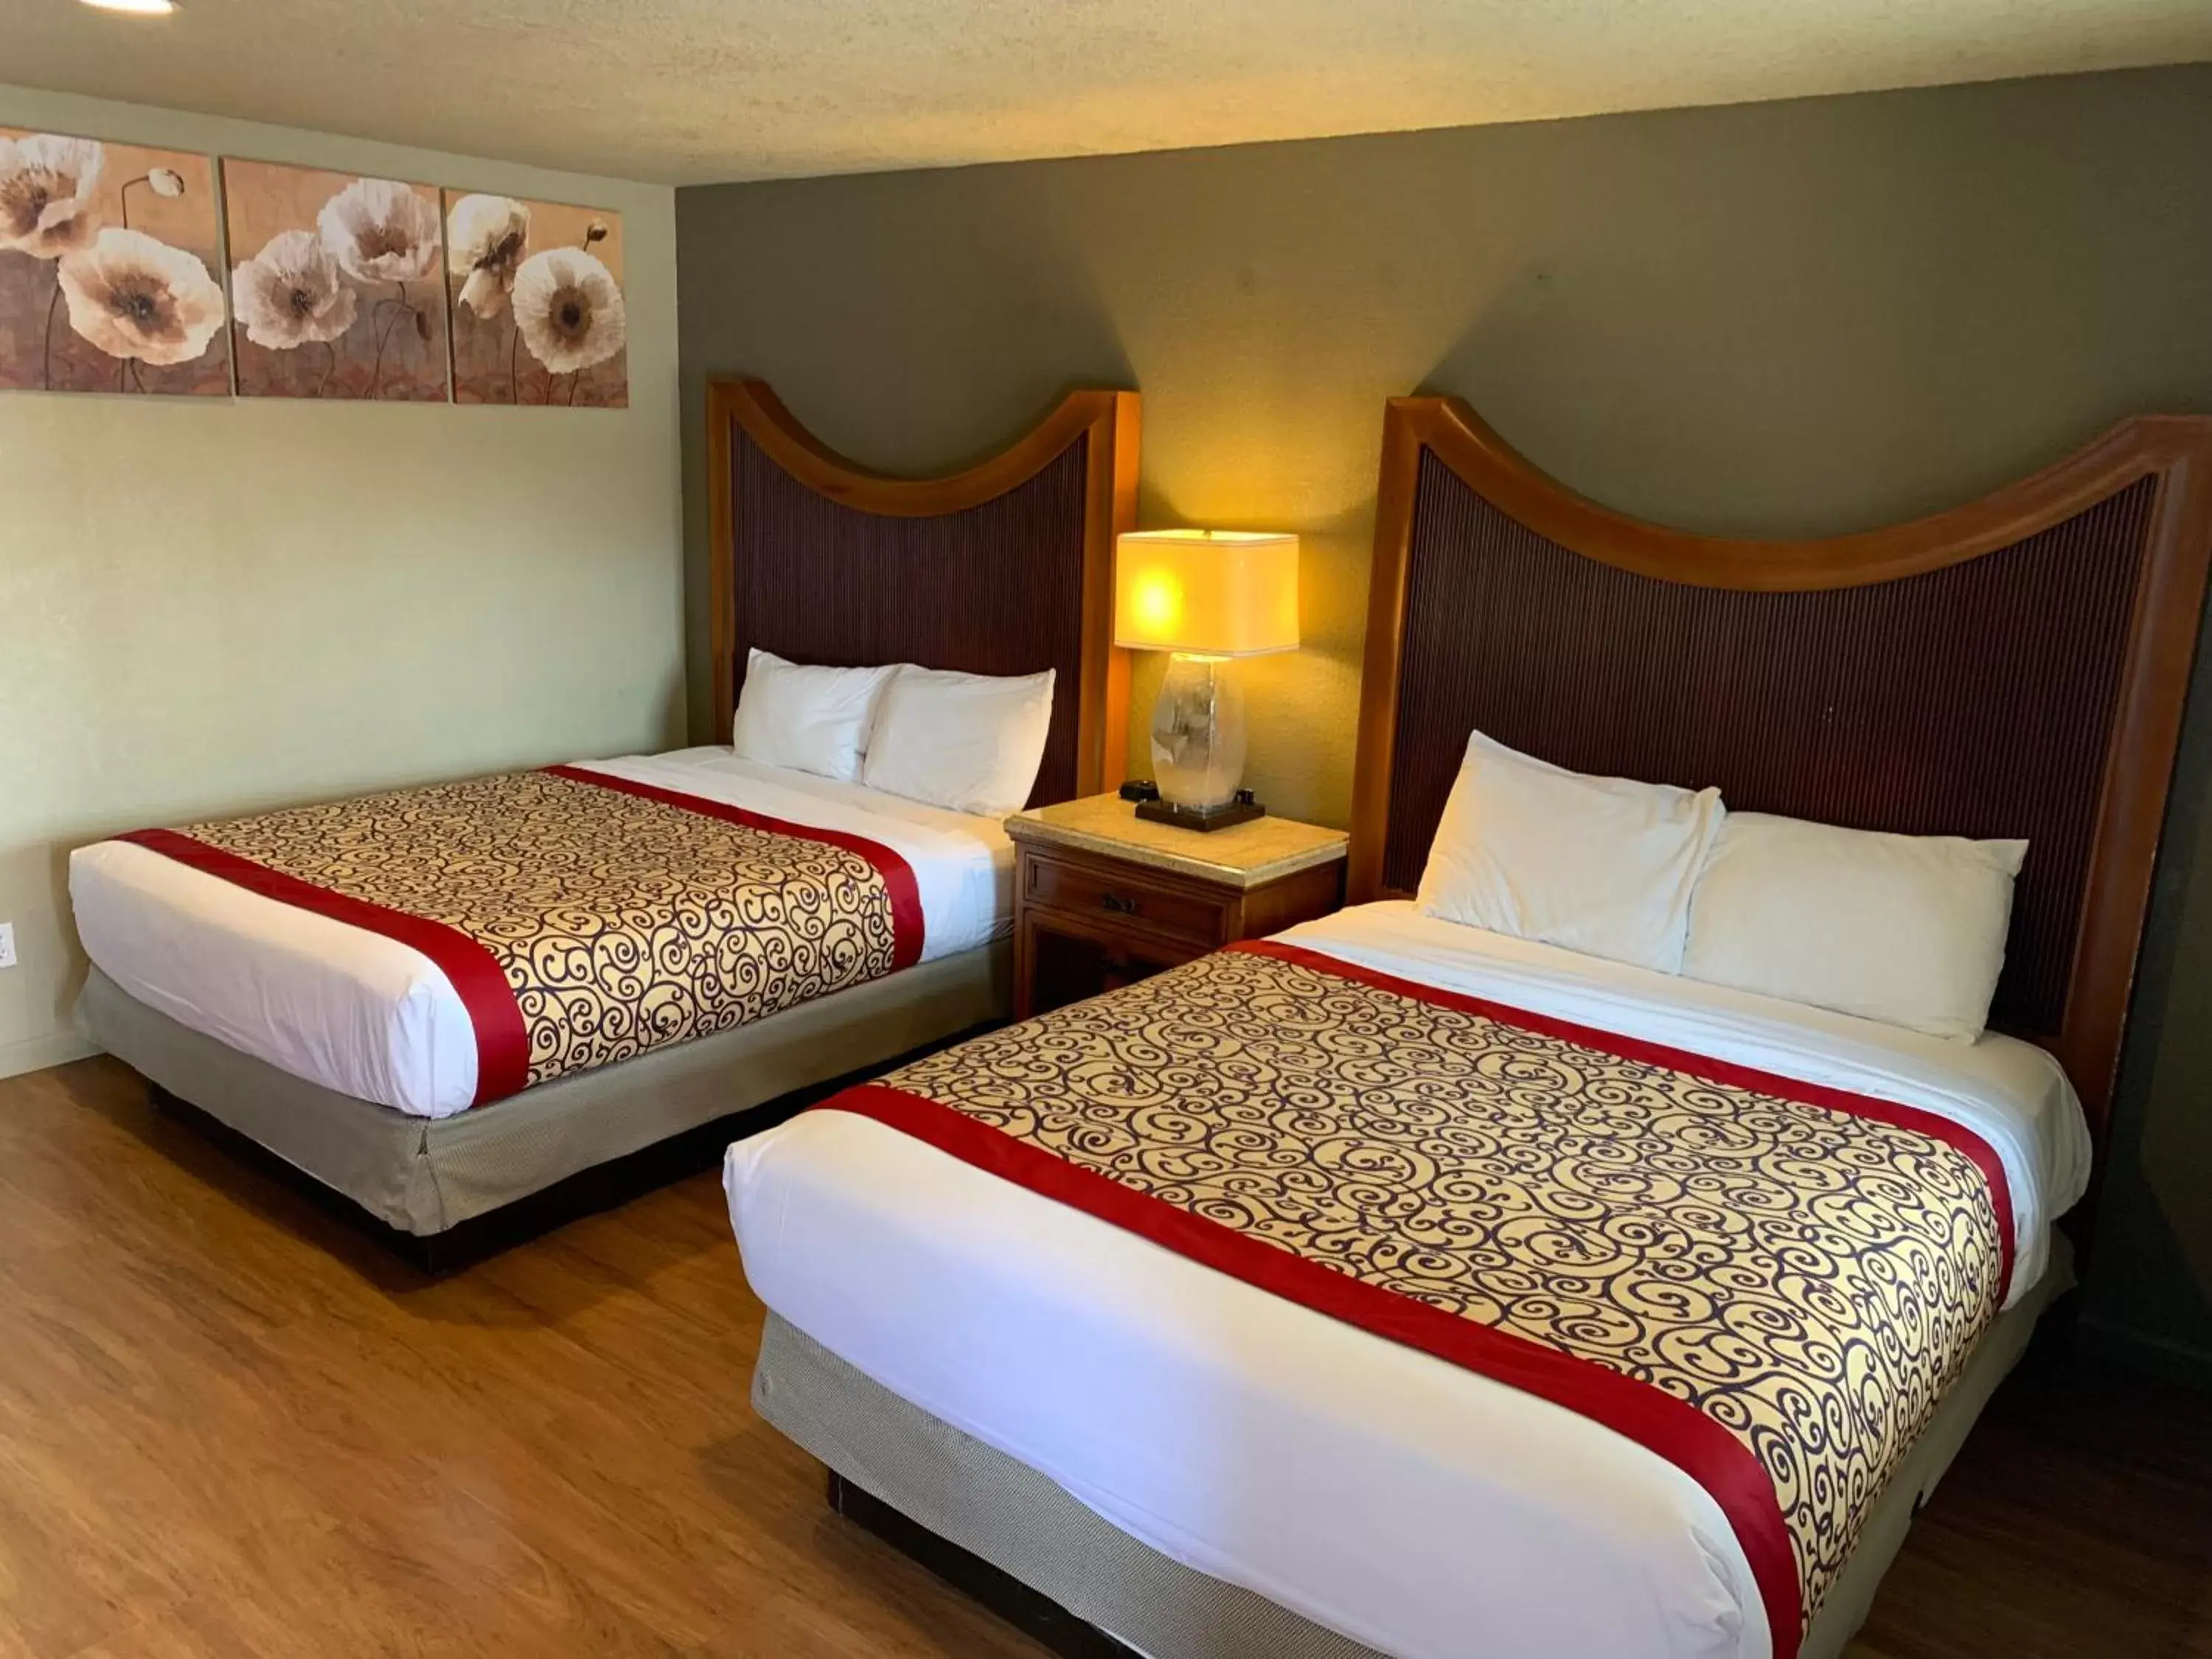 Deluxe Queen Room with Two Queen Beds in Rodeway Inn Flagstaff East Route 66